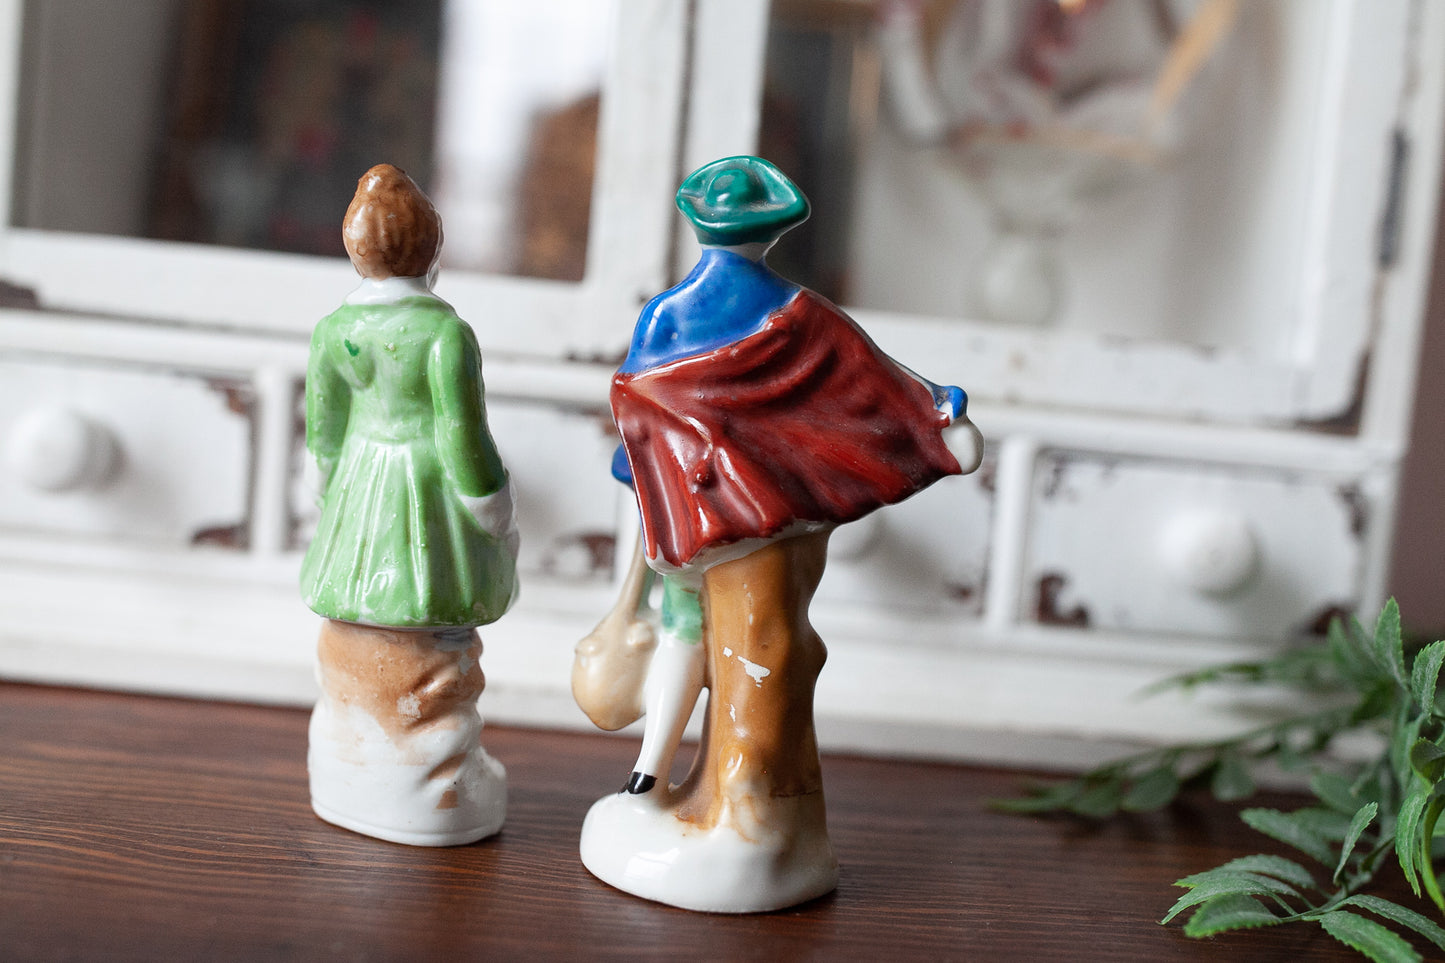 Vintage Occupied Japan Figurines - Porcelain Figurines